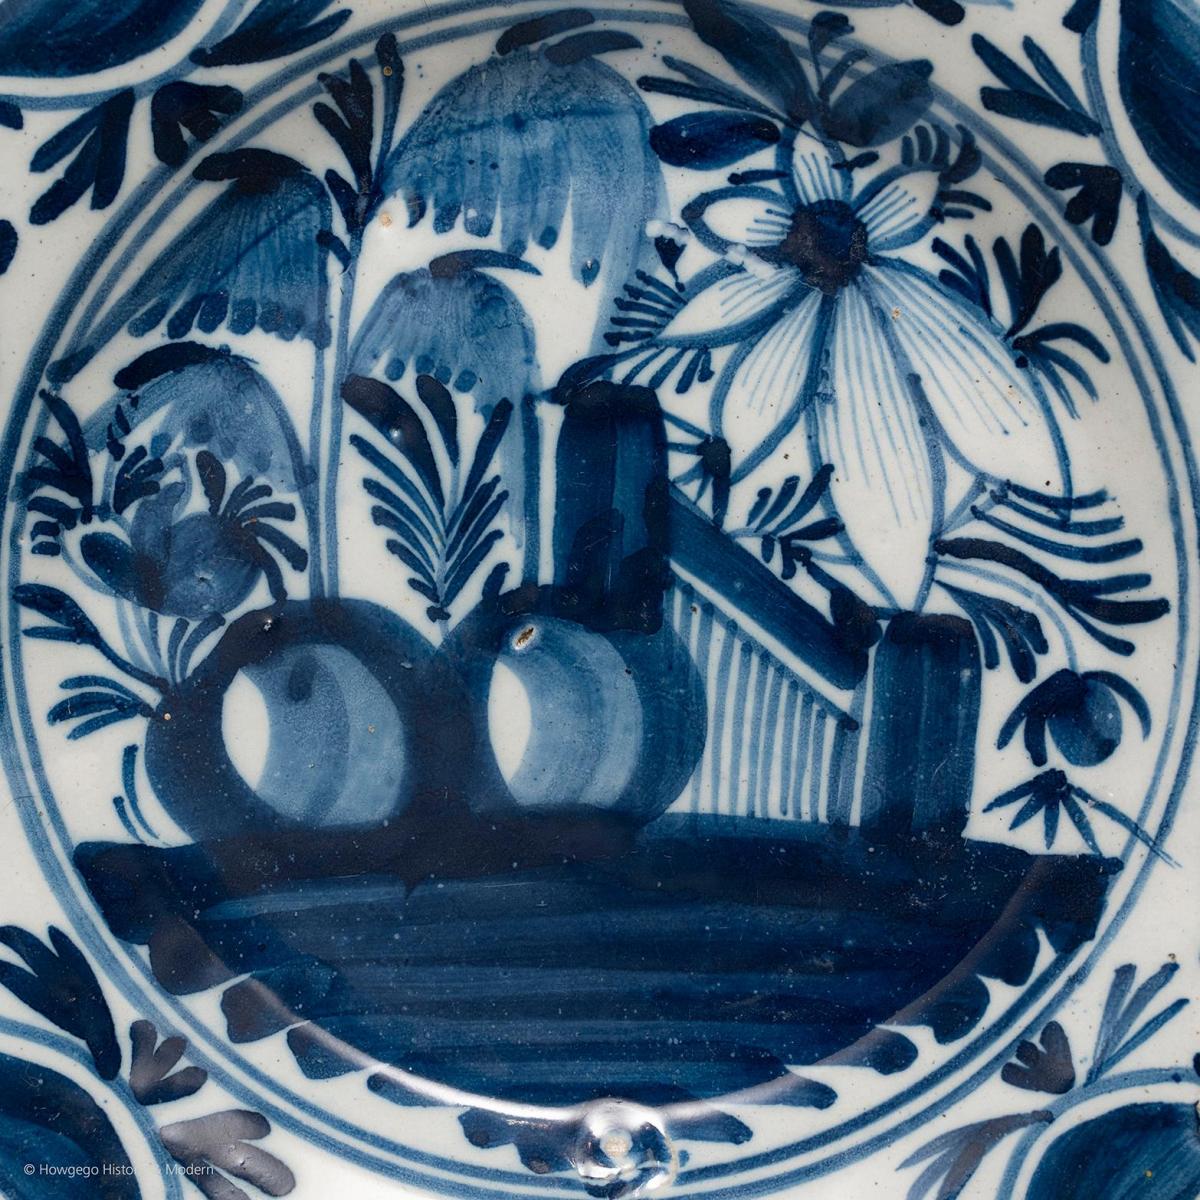 Dutch delftware plate, circa 1740